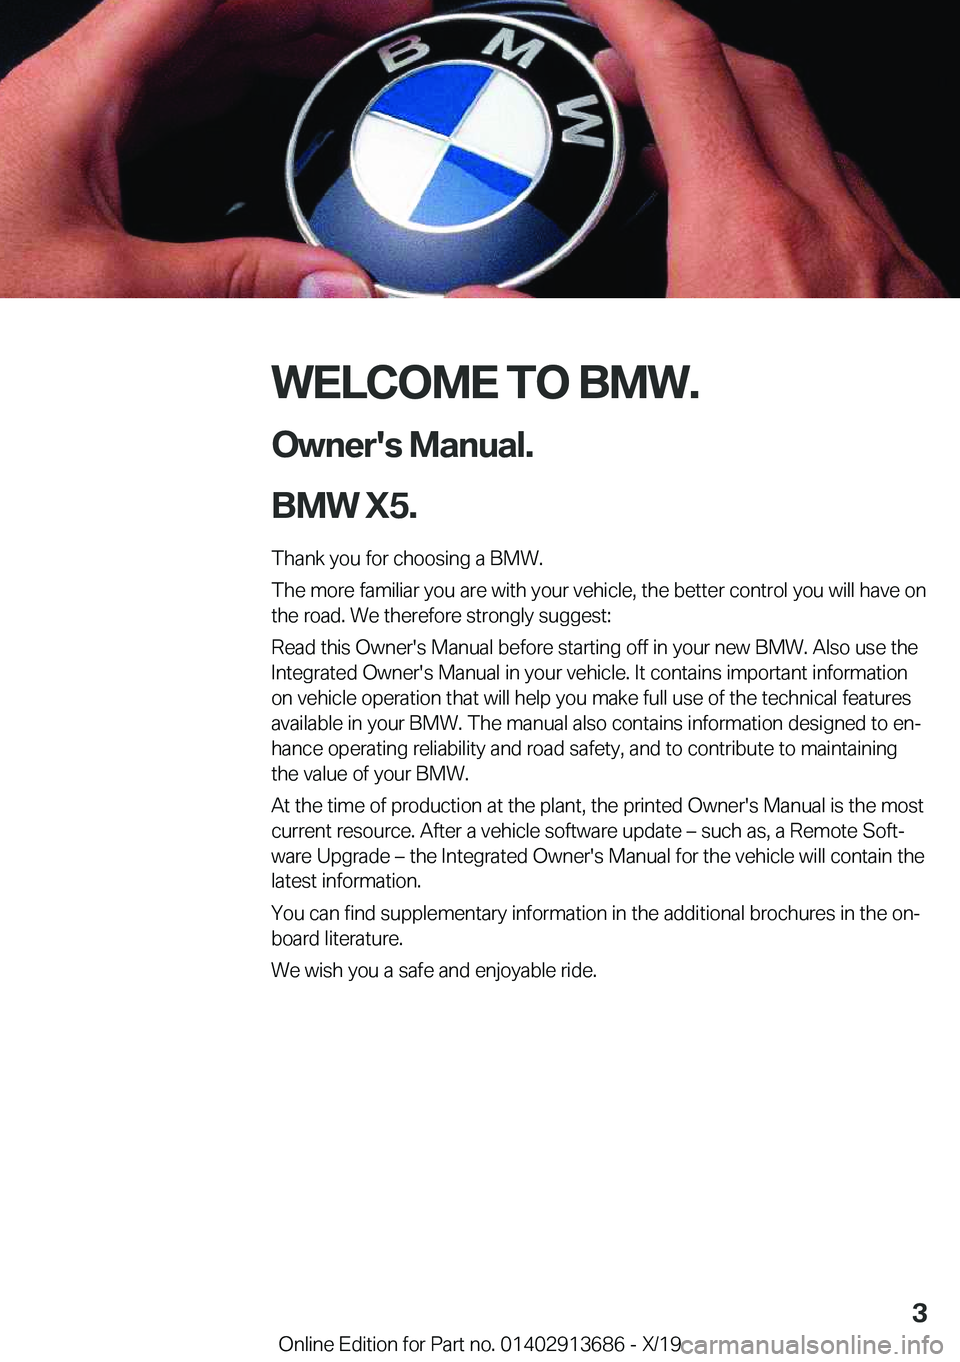 BMW X5 2020  Owners Manual �W�E�L�C�O�M�E��T�O��B�M�W�.�O�w�n�e�r�'�s��M�a�n�u�a�l�.
�B�M�W��X�5�.
�T�h�a�n�k��y�o�u��f�o�r��c�h�o�o�s�i�n�g��a��B�M�W�.
�T�h�e��m�o�r�e��f�a�m�i�l�i�a�r��y�o�u��a�r�e��w�i�t�h�